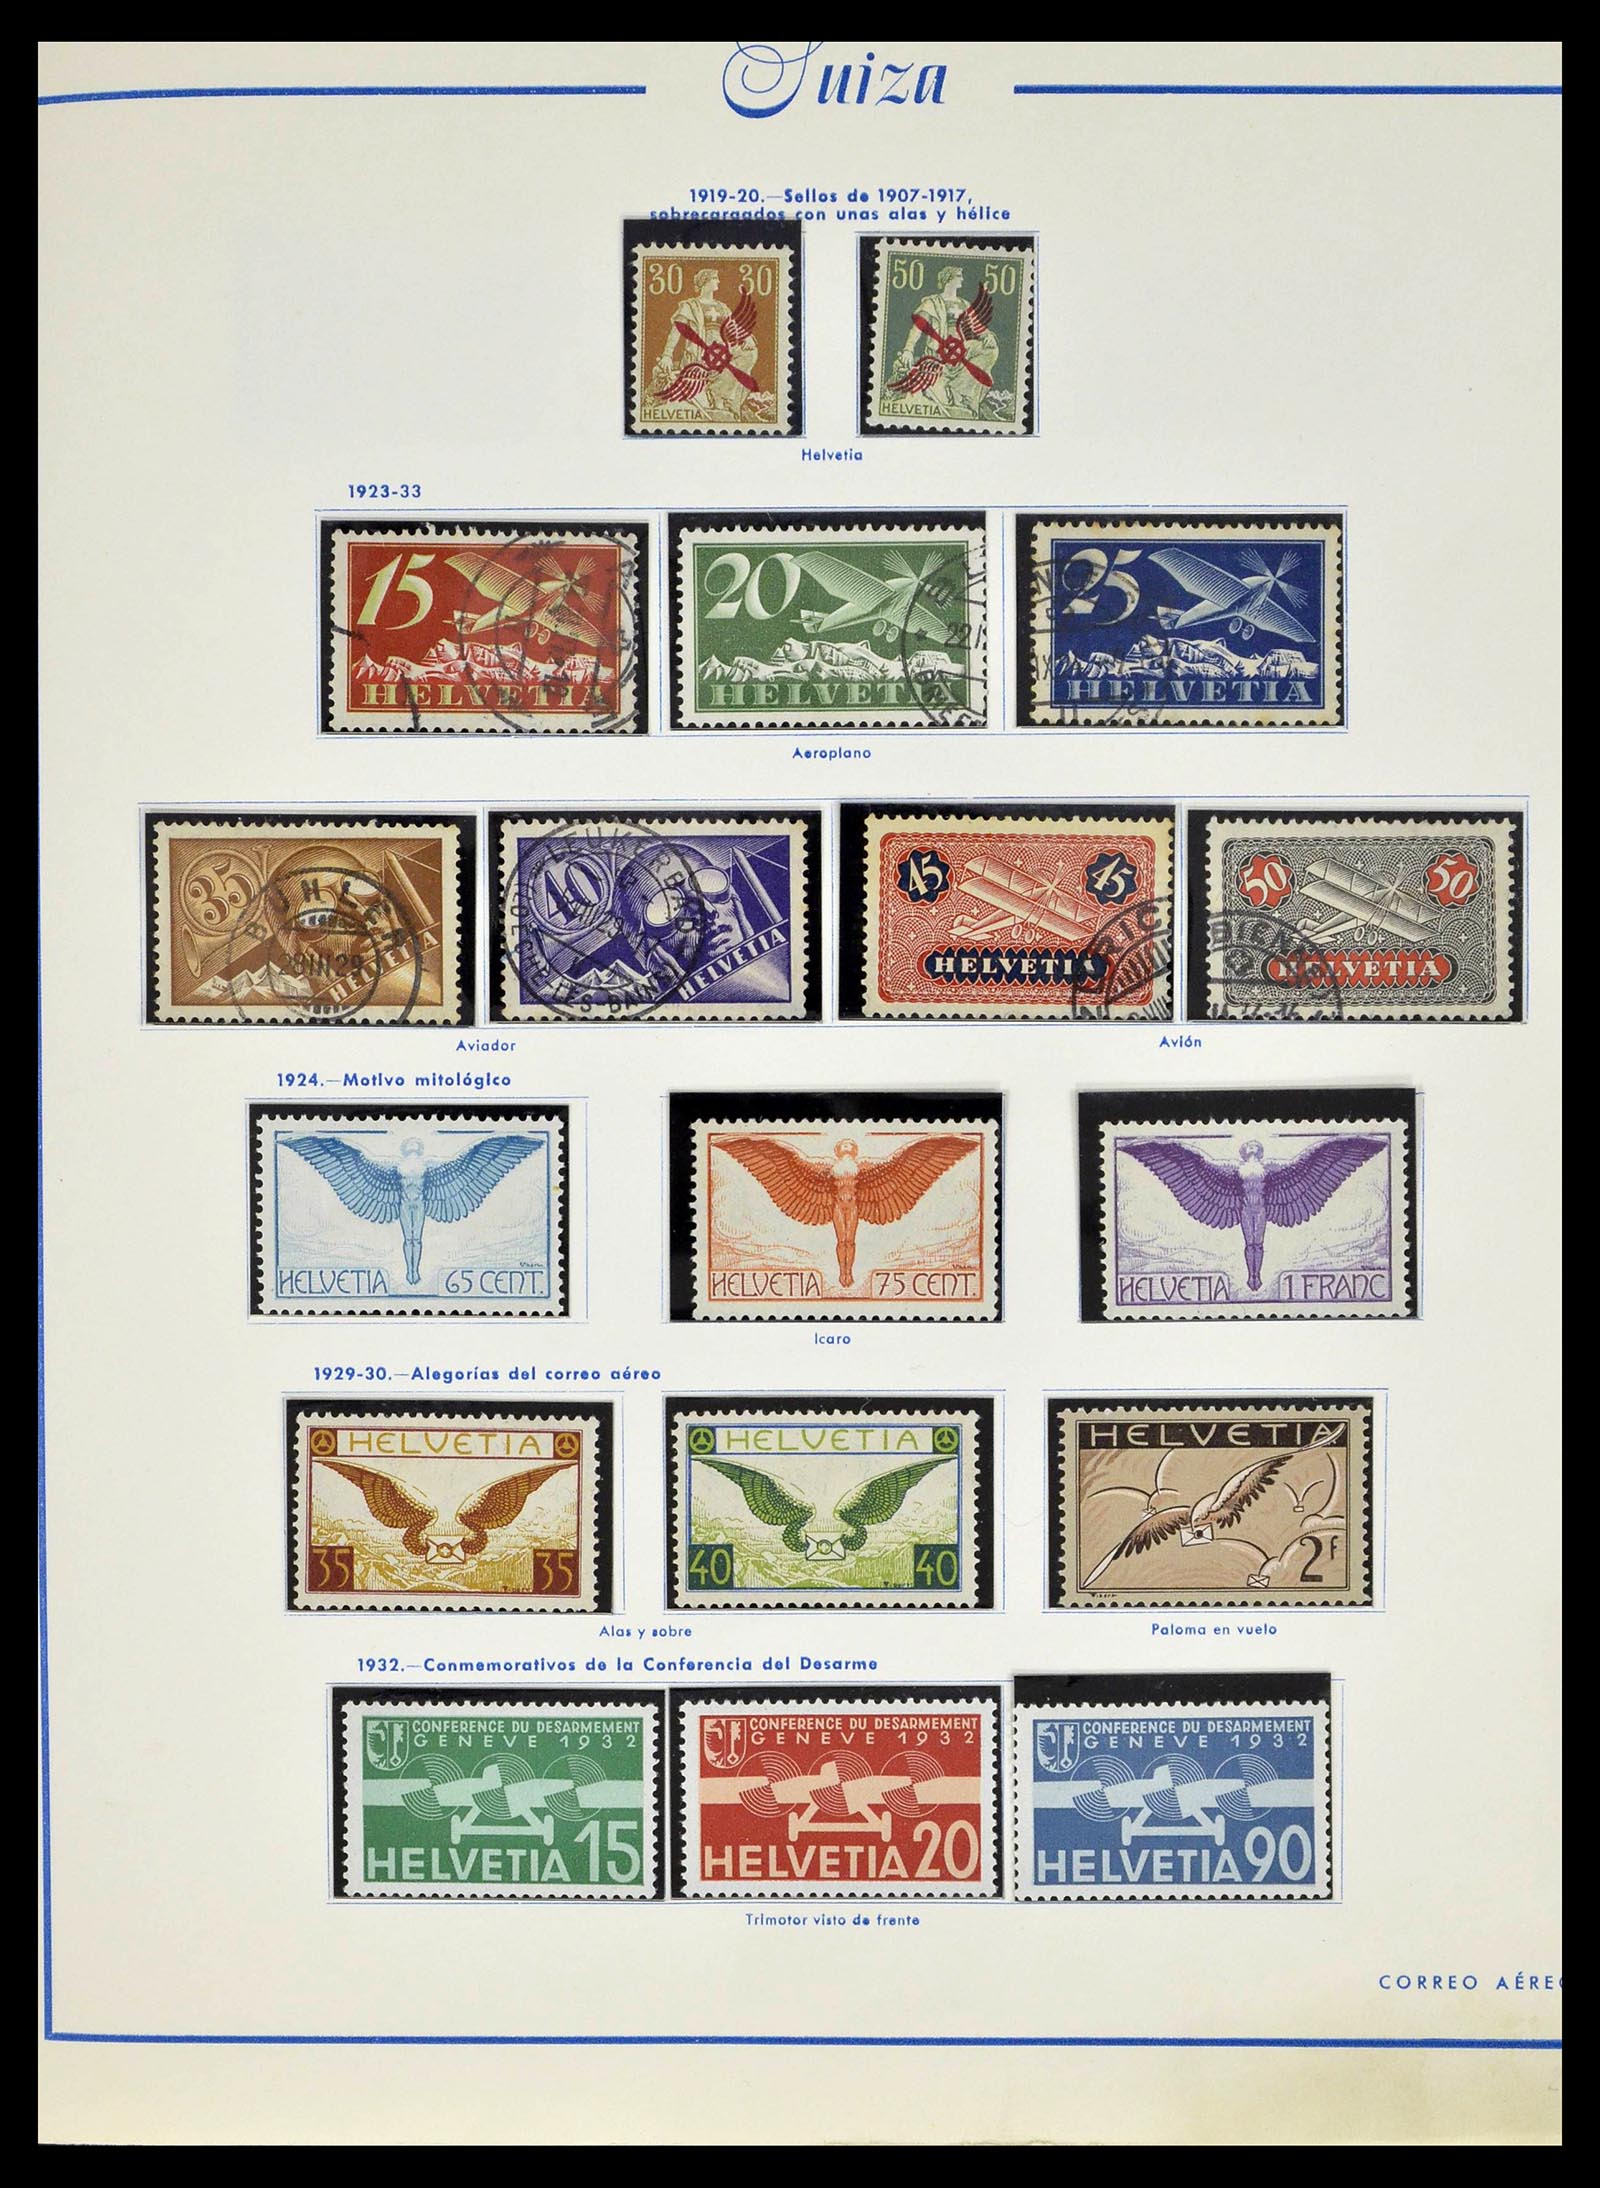 39217 0086 - Stamp collection 39217 Switzerland 1850-1986.